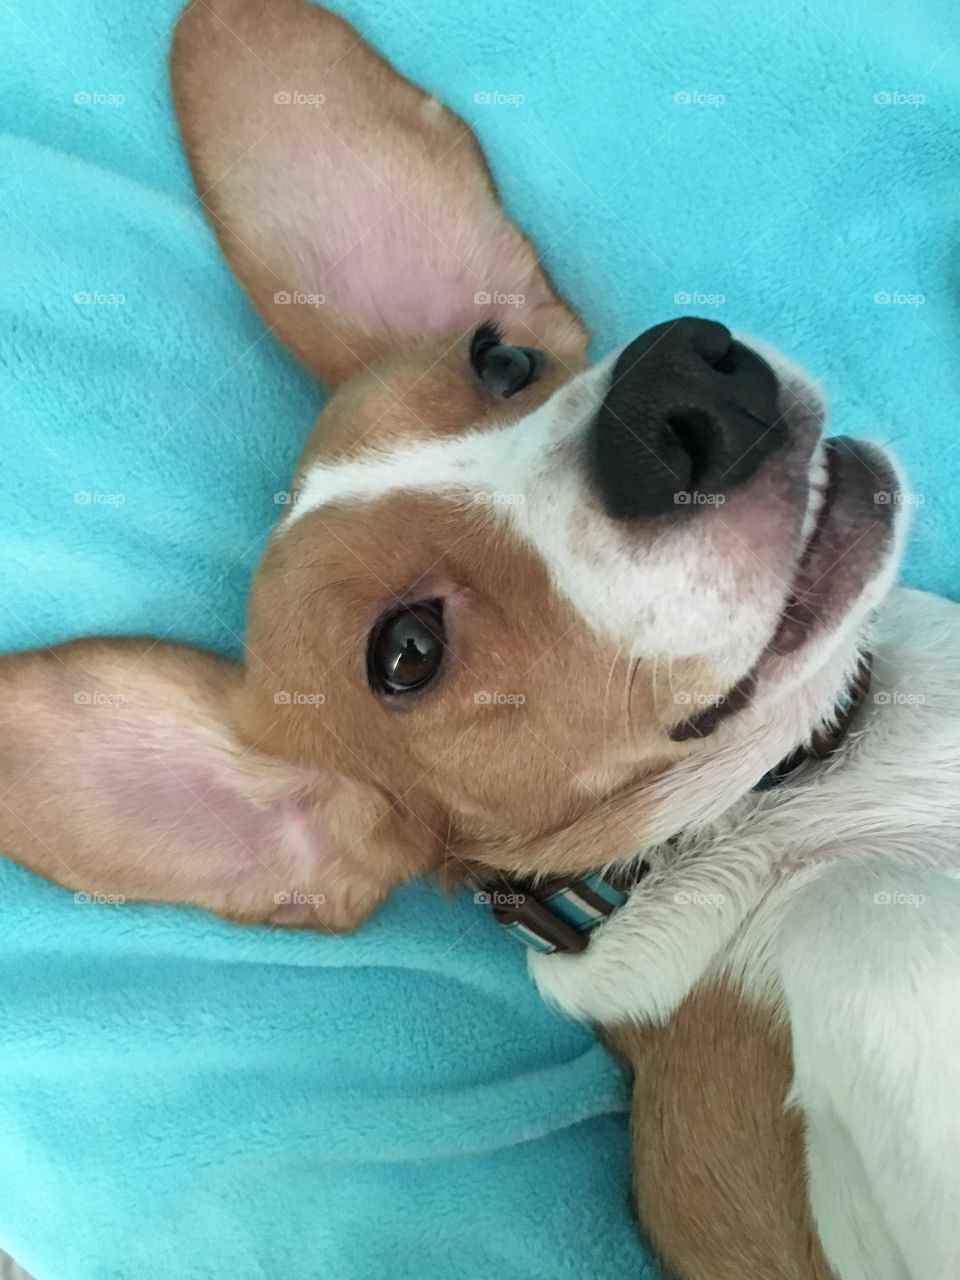 Silly beagle
